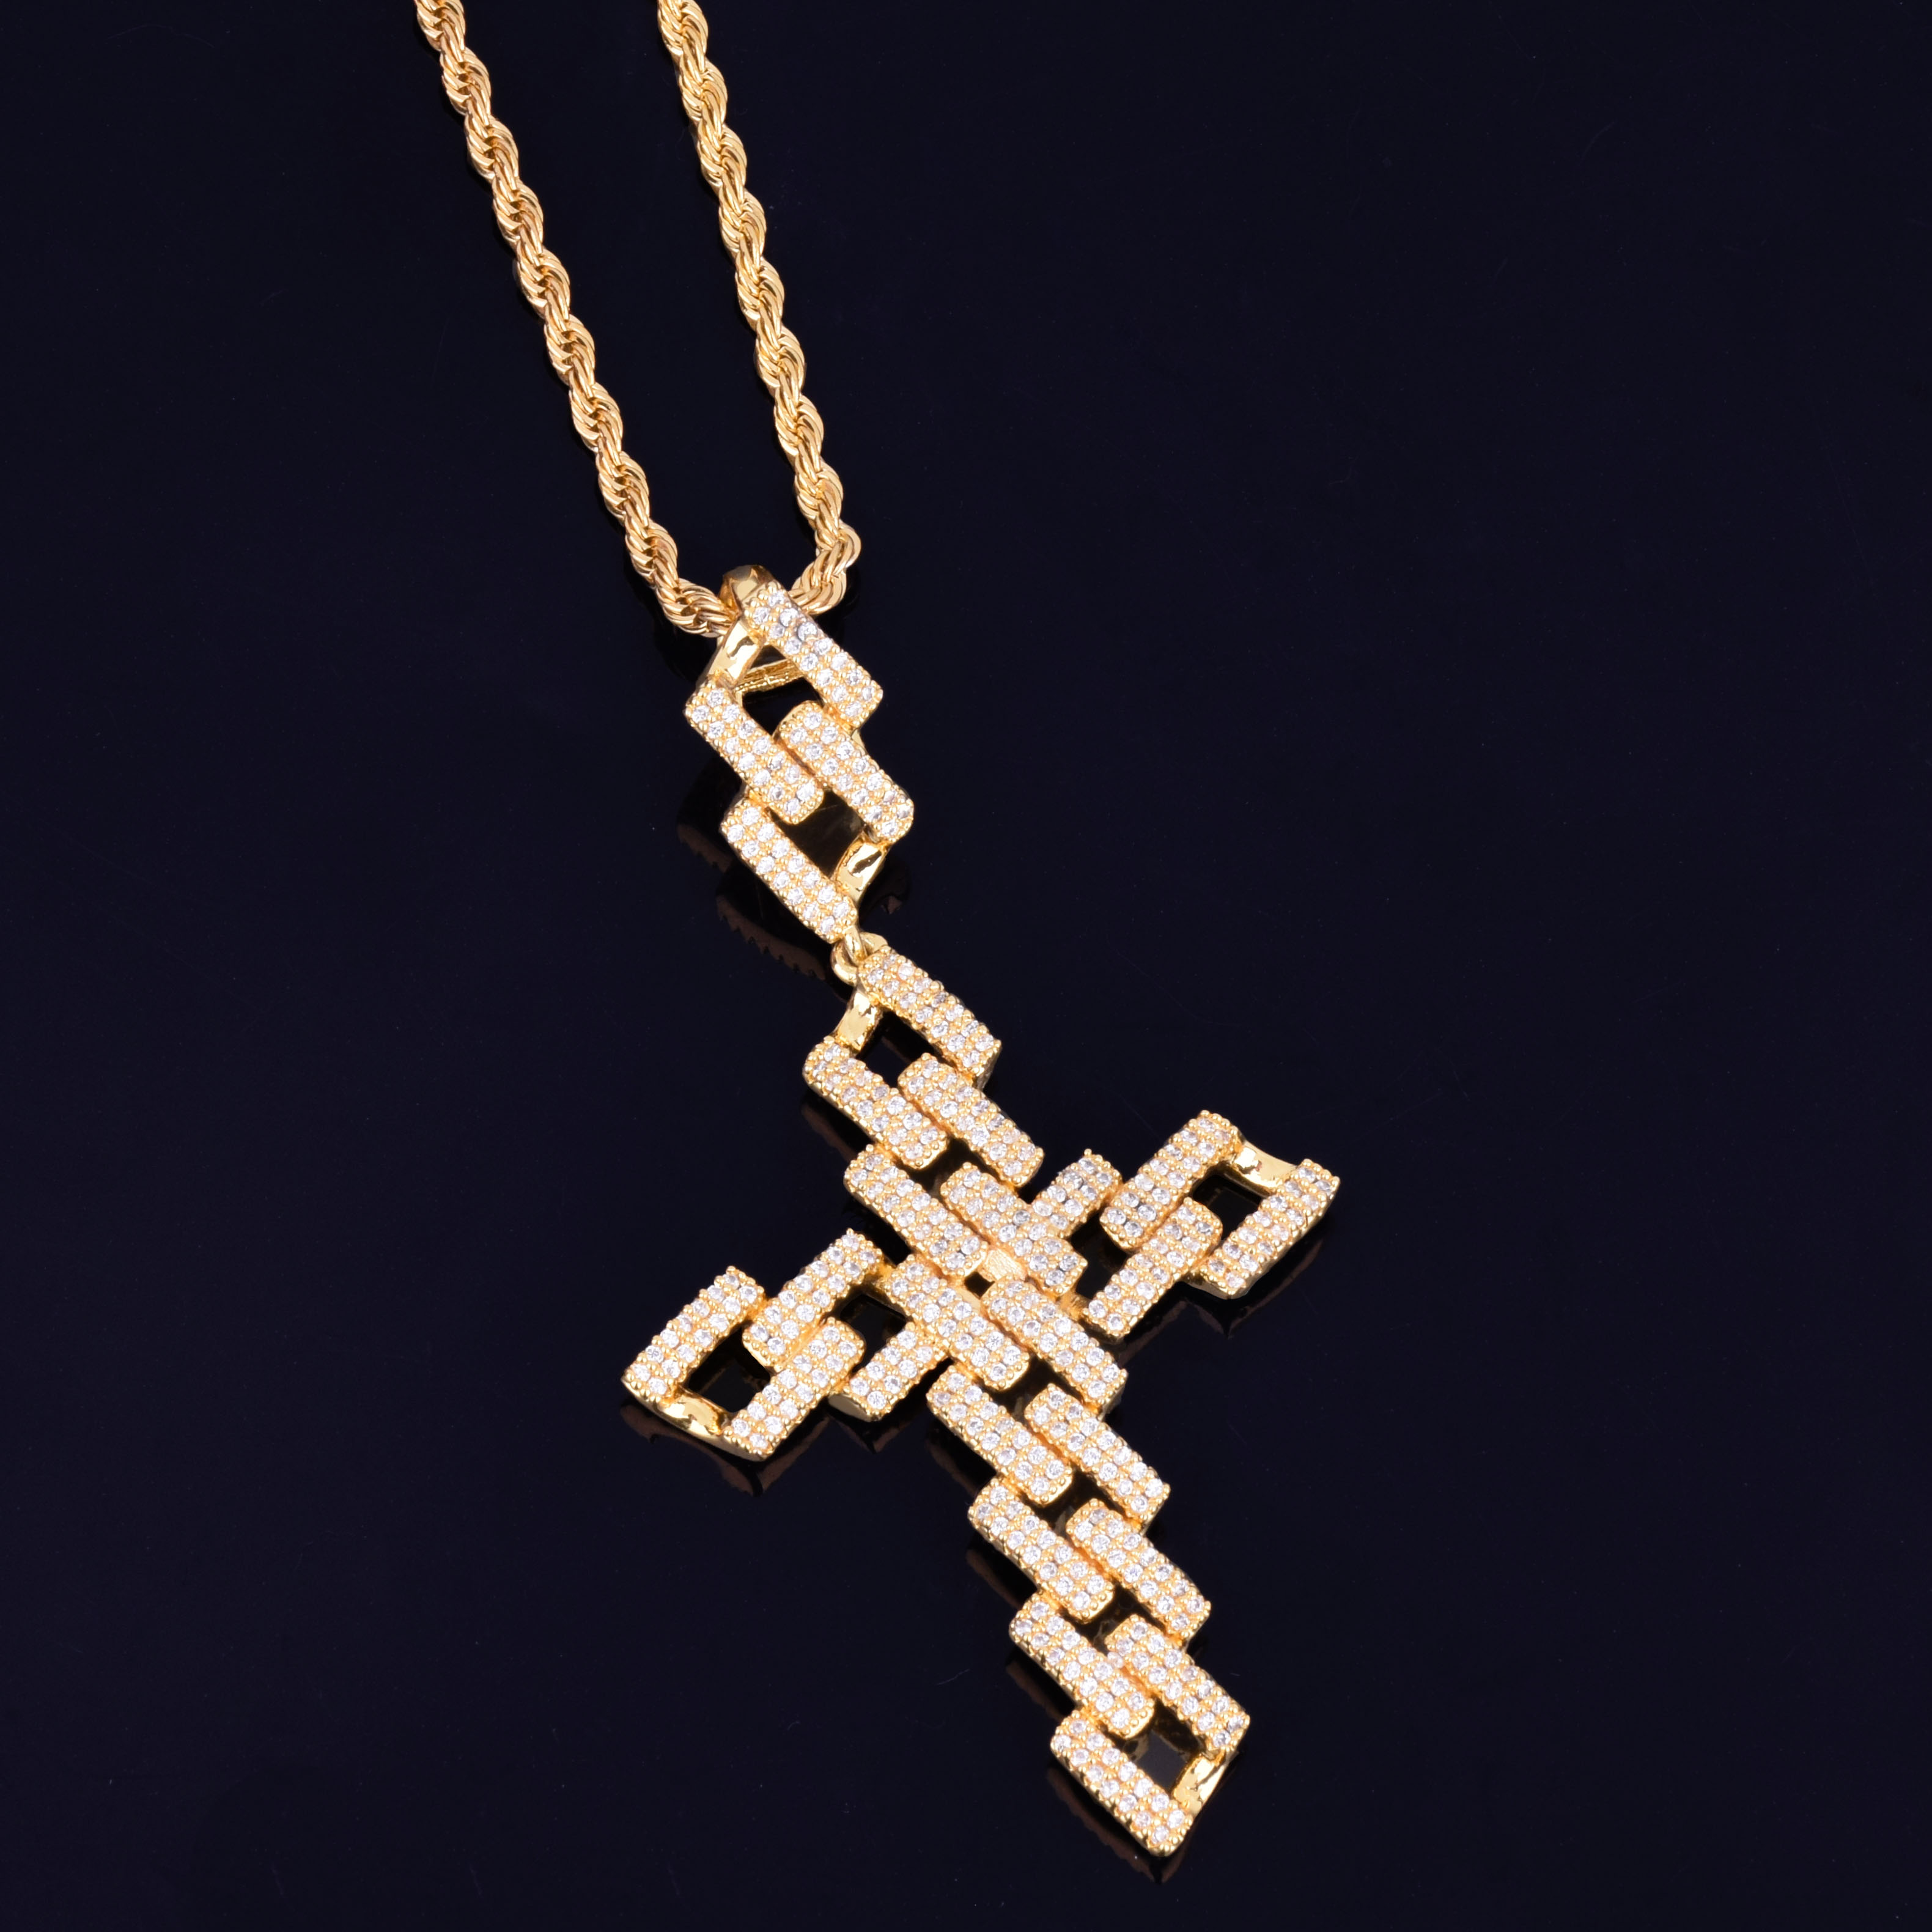 Miami Cuban Cross Links Necklace & Pendant With 4mm Tennis Chain Gold Color AAA Cubic Zircon Men's Women Hip hop Rock Jewelry